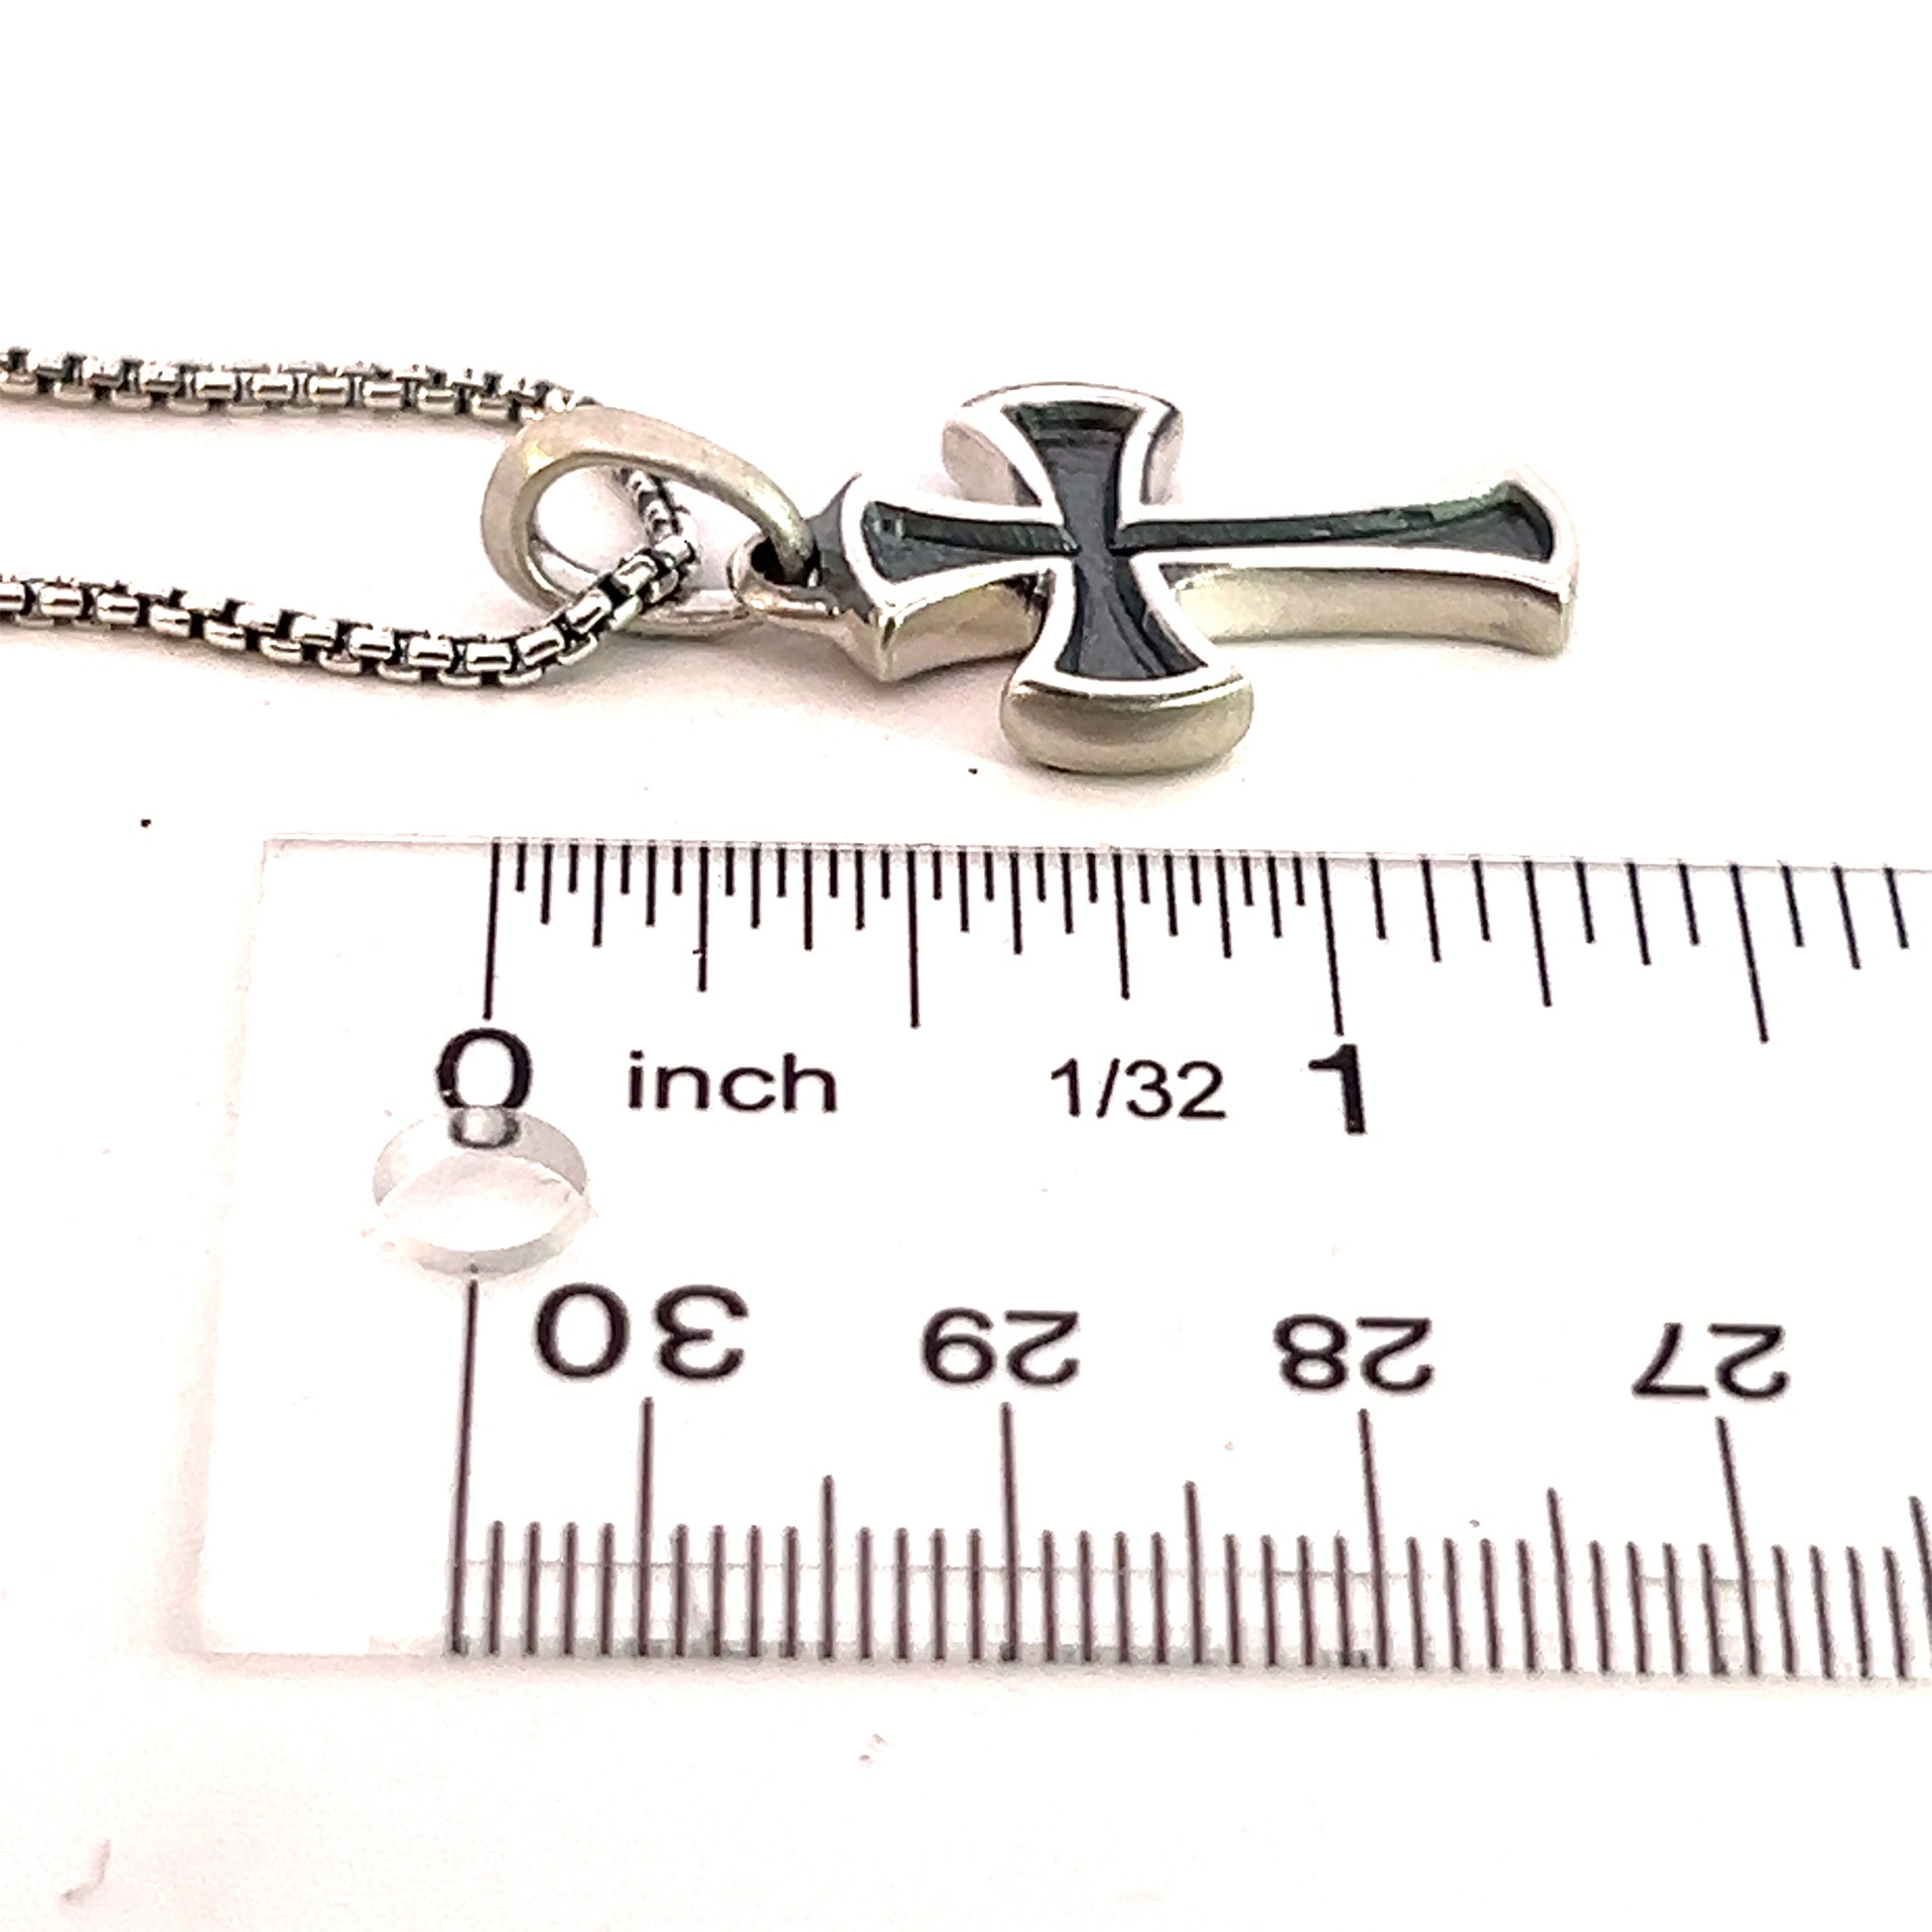 David Yurman Authentic Estate Small Cross Necklace 18" Silver 2.8 mm DY350 - Certified Fine Jewelry